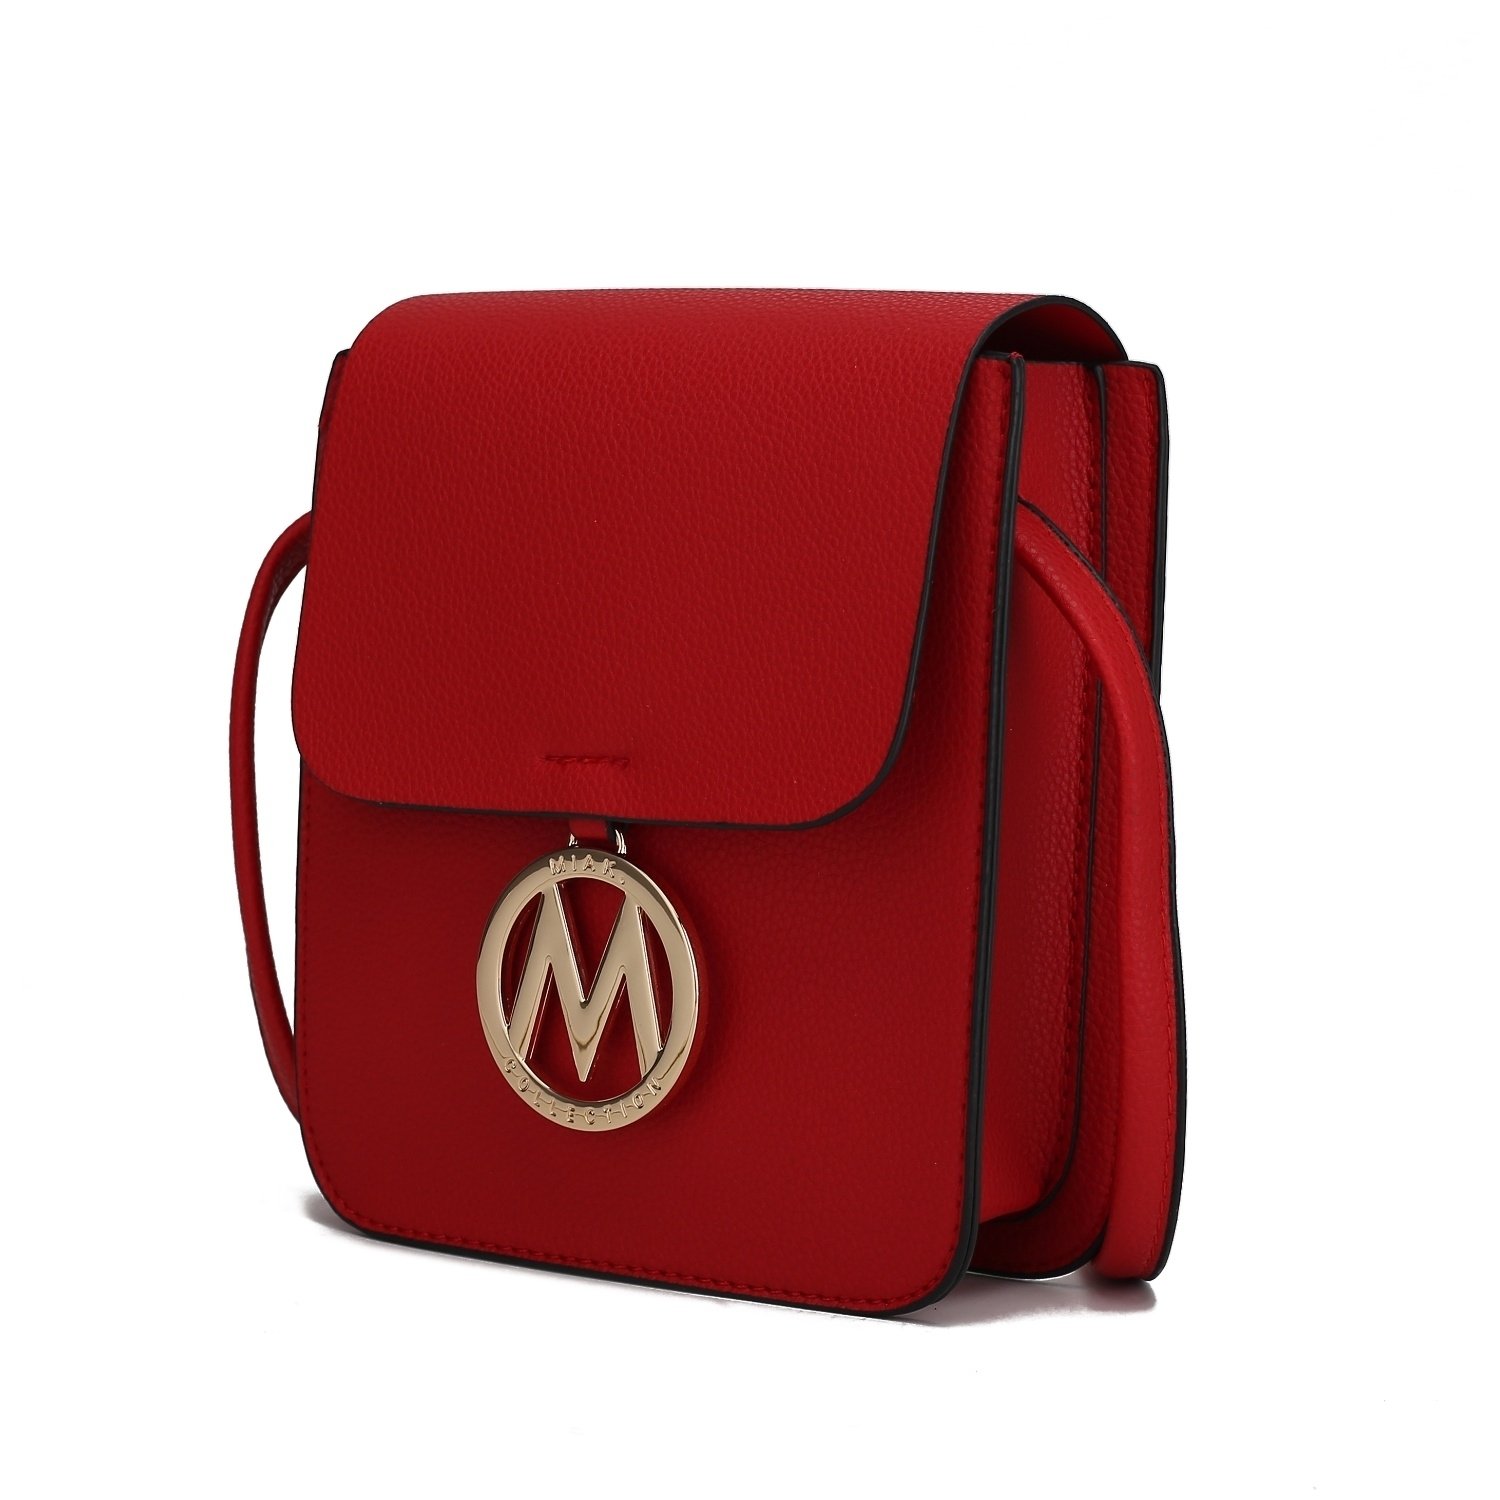 MKF Collection Skylar Vegan Leather Womens Crossbody Handbag by Mia K